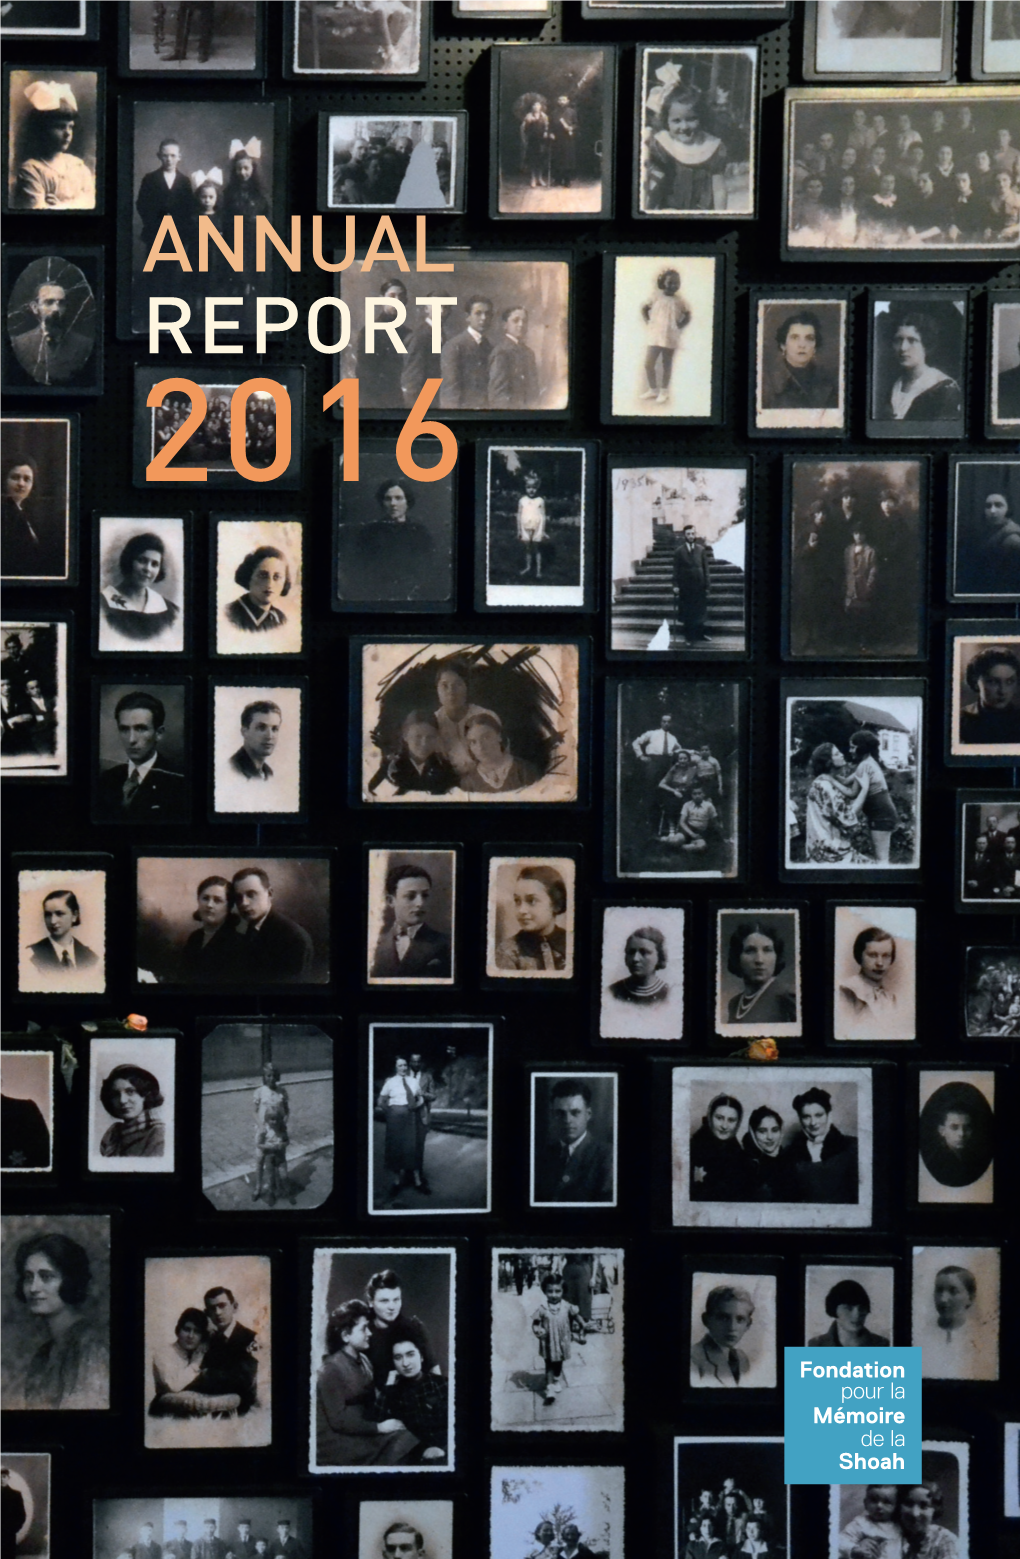 ANNUAL REPORT 2016 Cover: Auschwitz-Birkenau Memorial and Museum 1